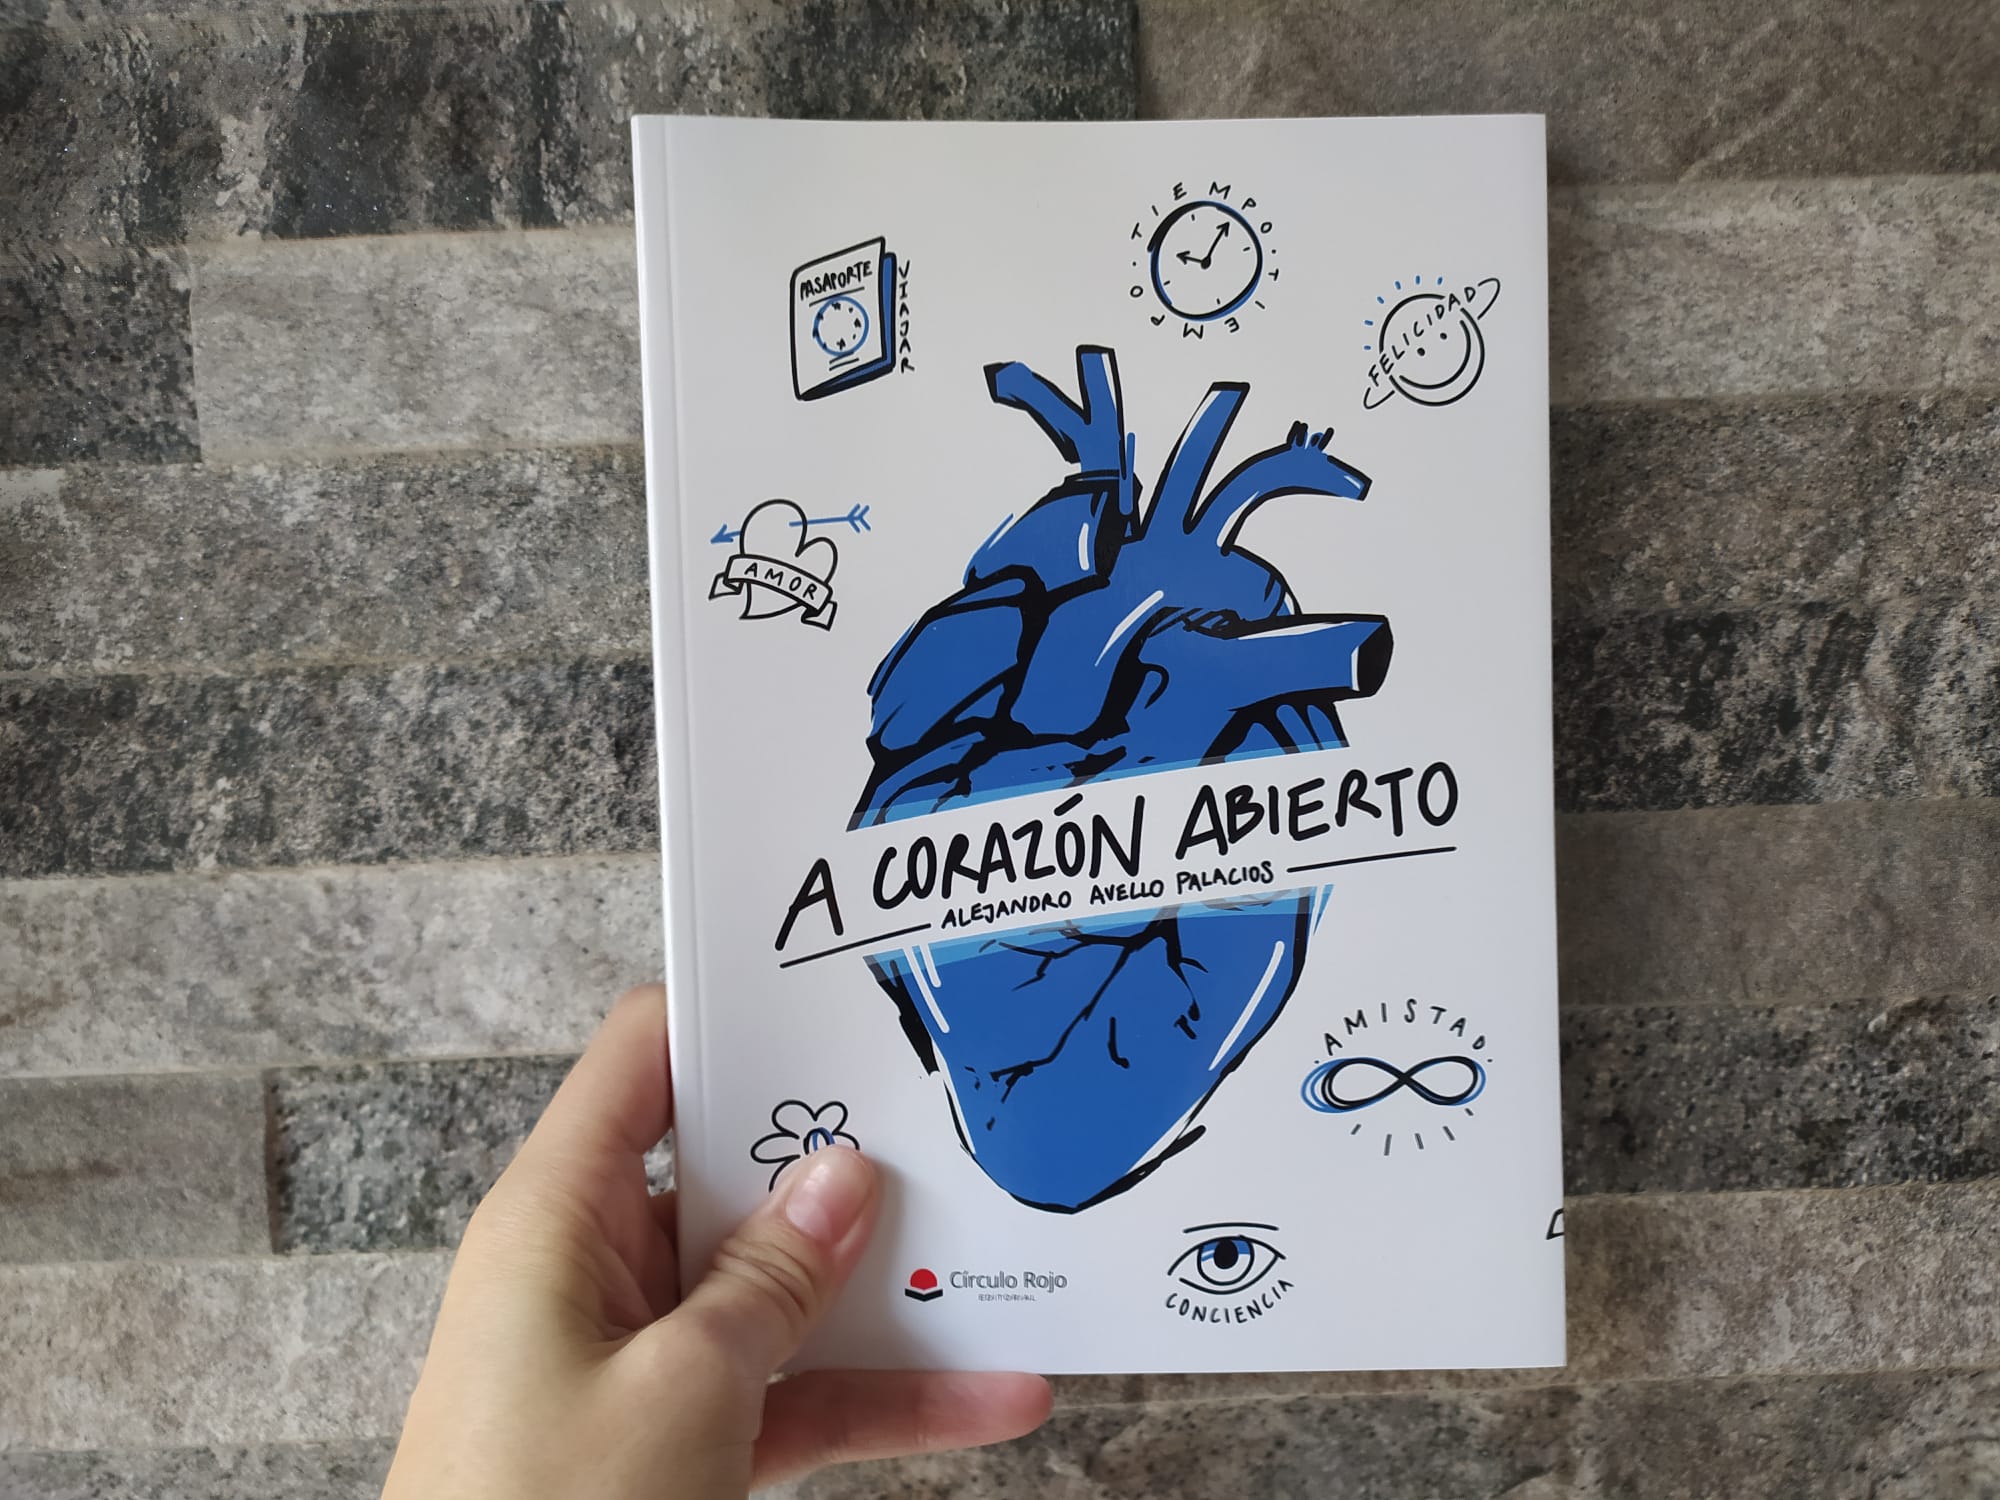 Reseña de “A corazón abierto”, de Alejandro Avello Palacios  | Por Nuria Bellido